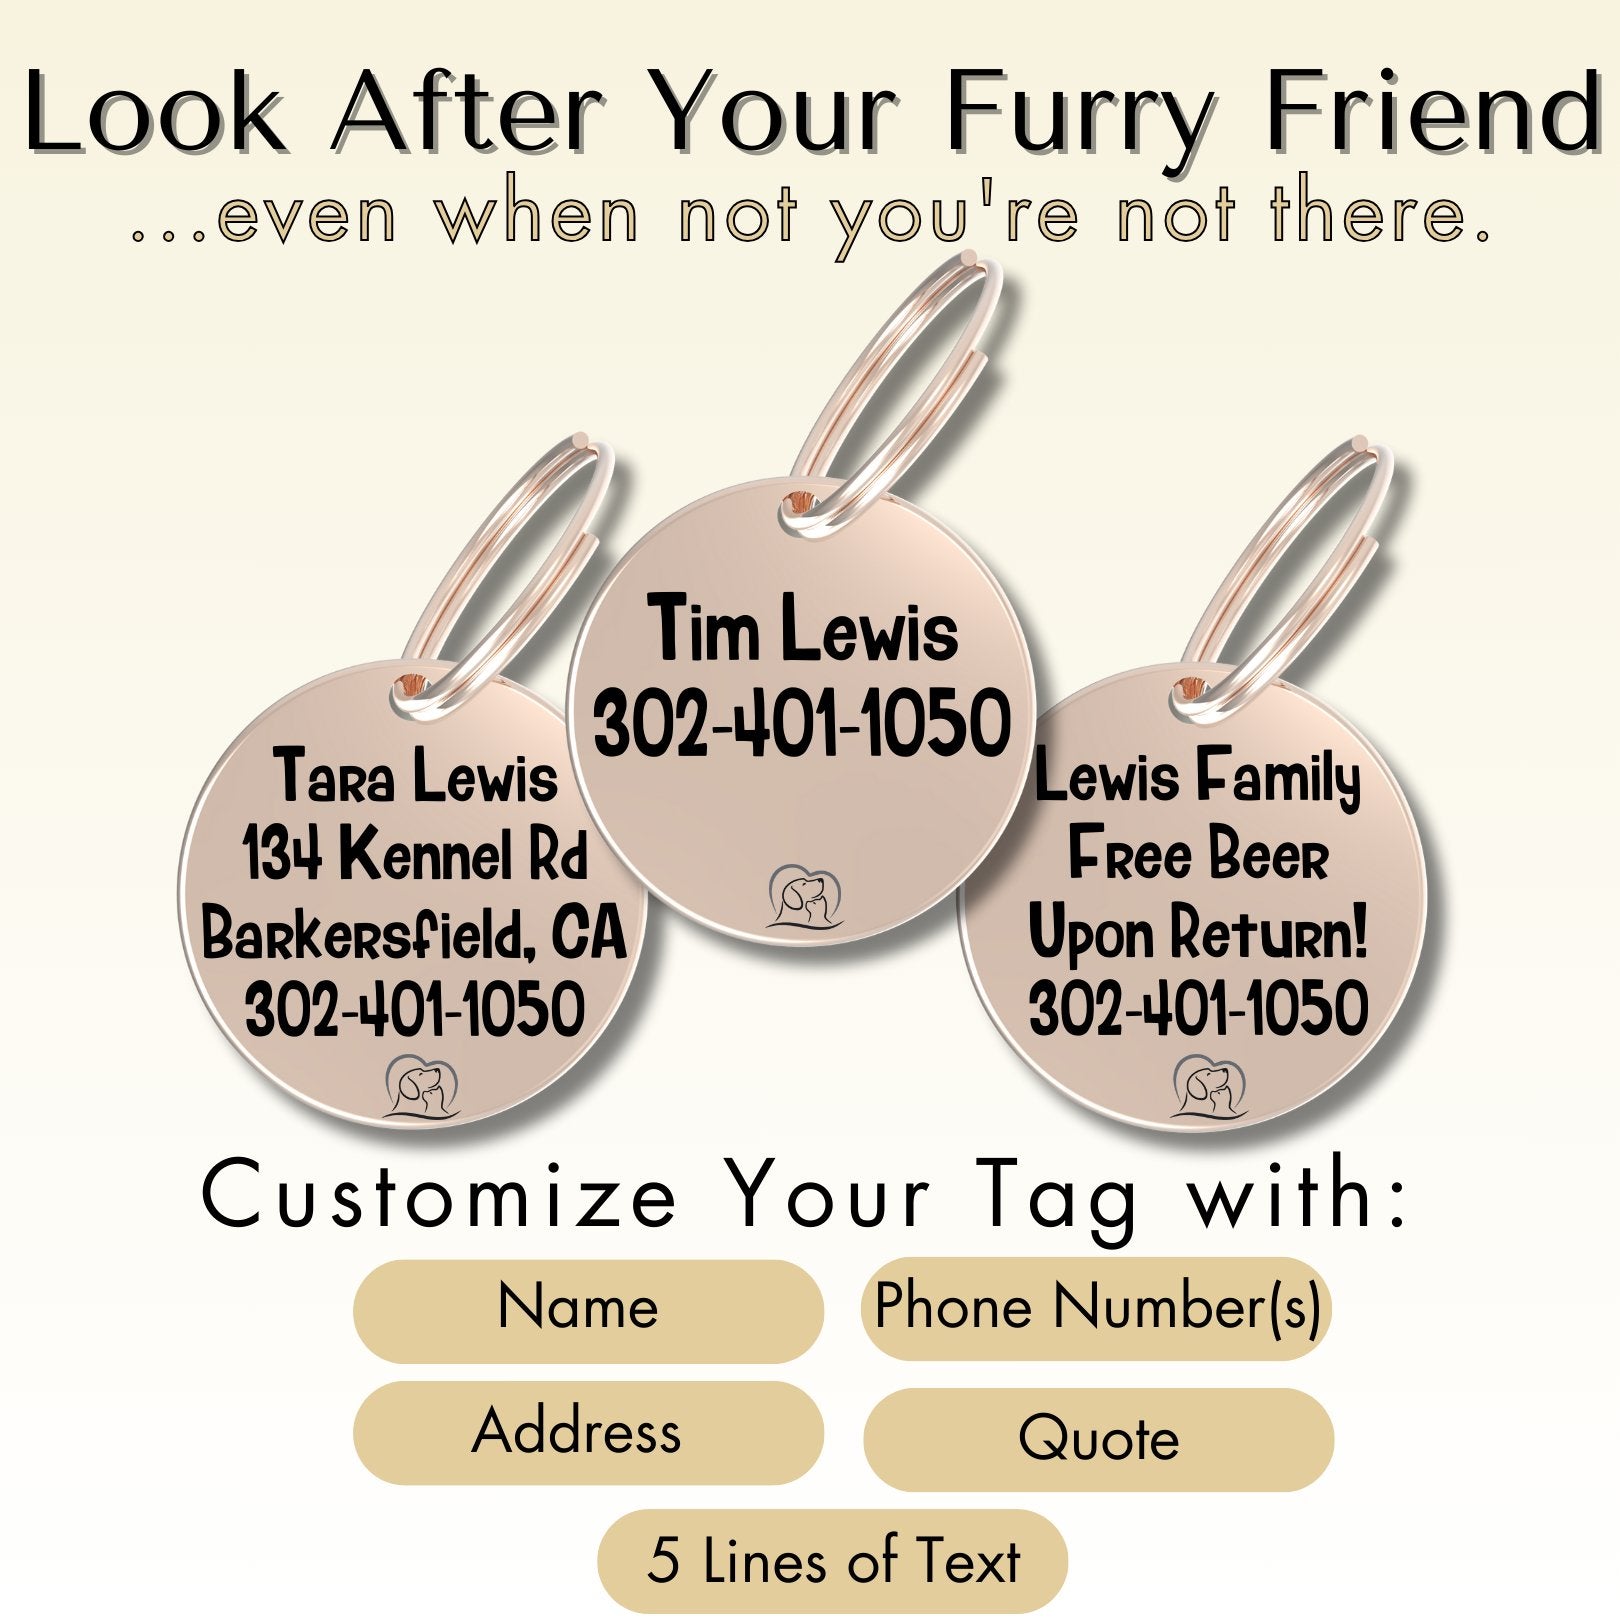 Breed Dog Tag - Personalized Breed Dog Tag (Shar Pei)